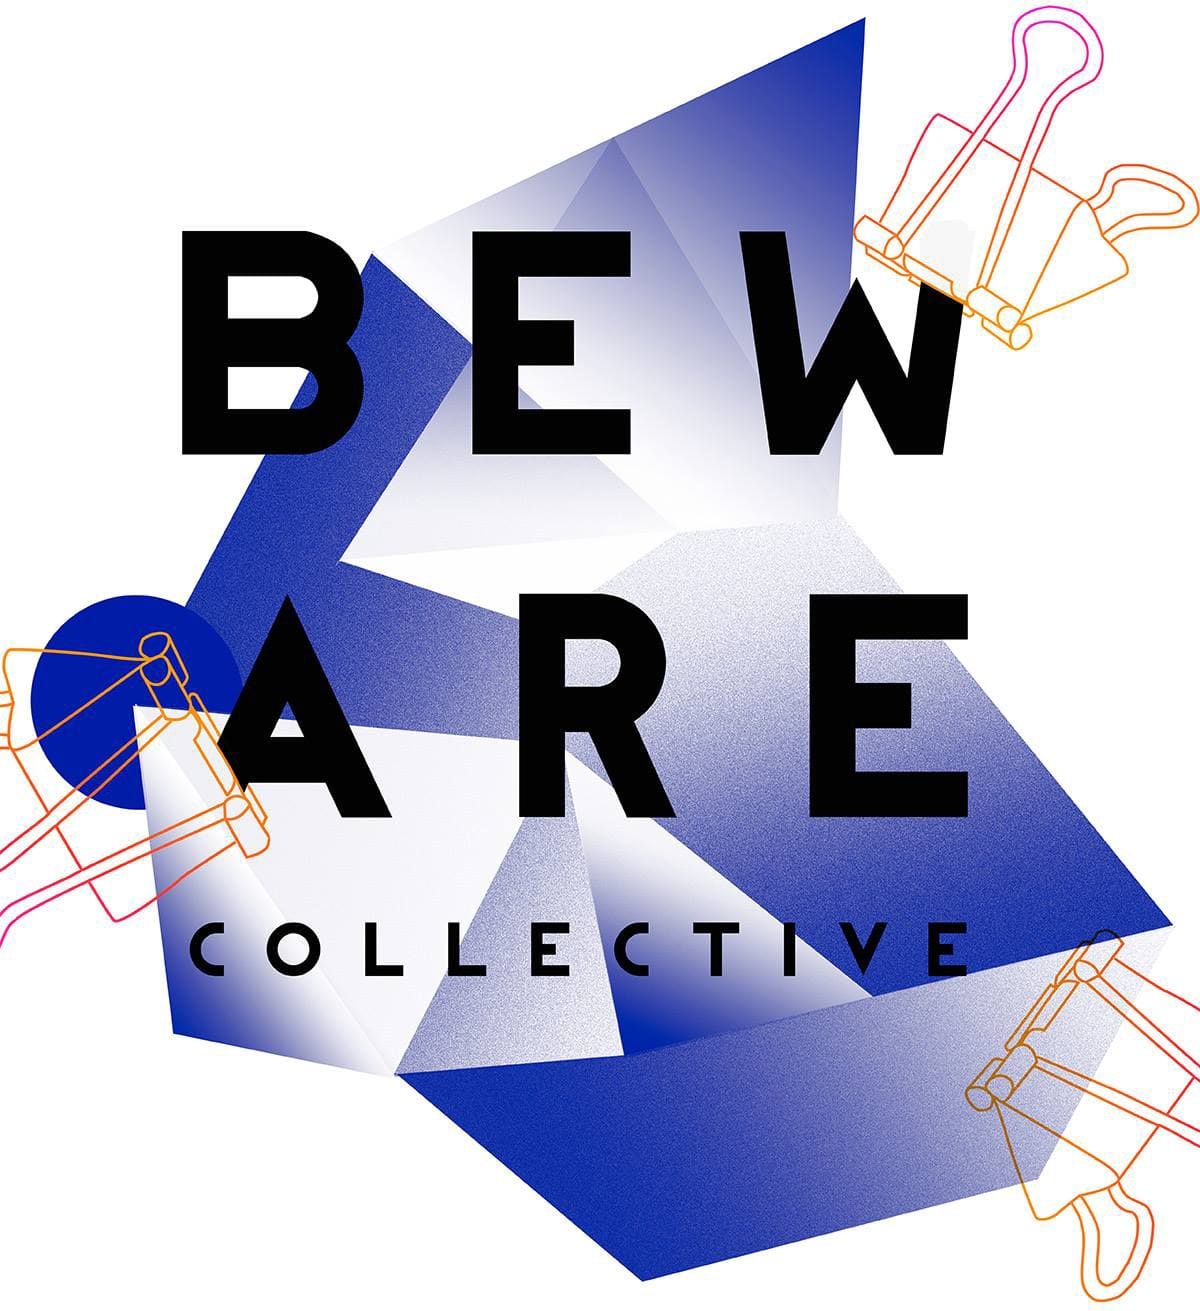 Beware Collective investit le Batofar le mardi 15 juillet 2014 ! 9